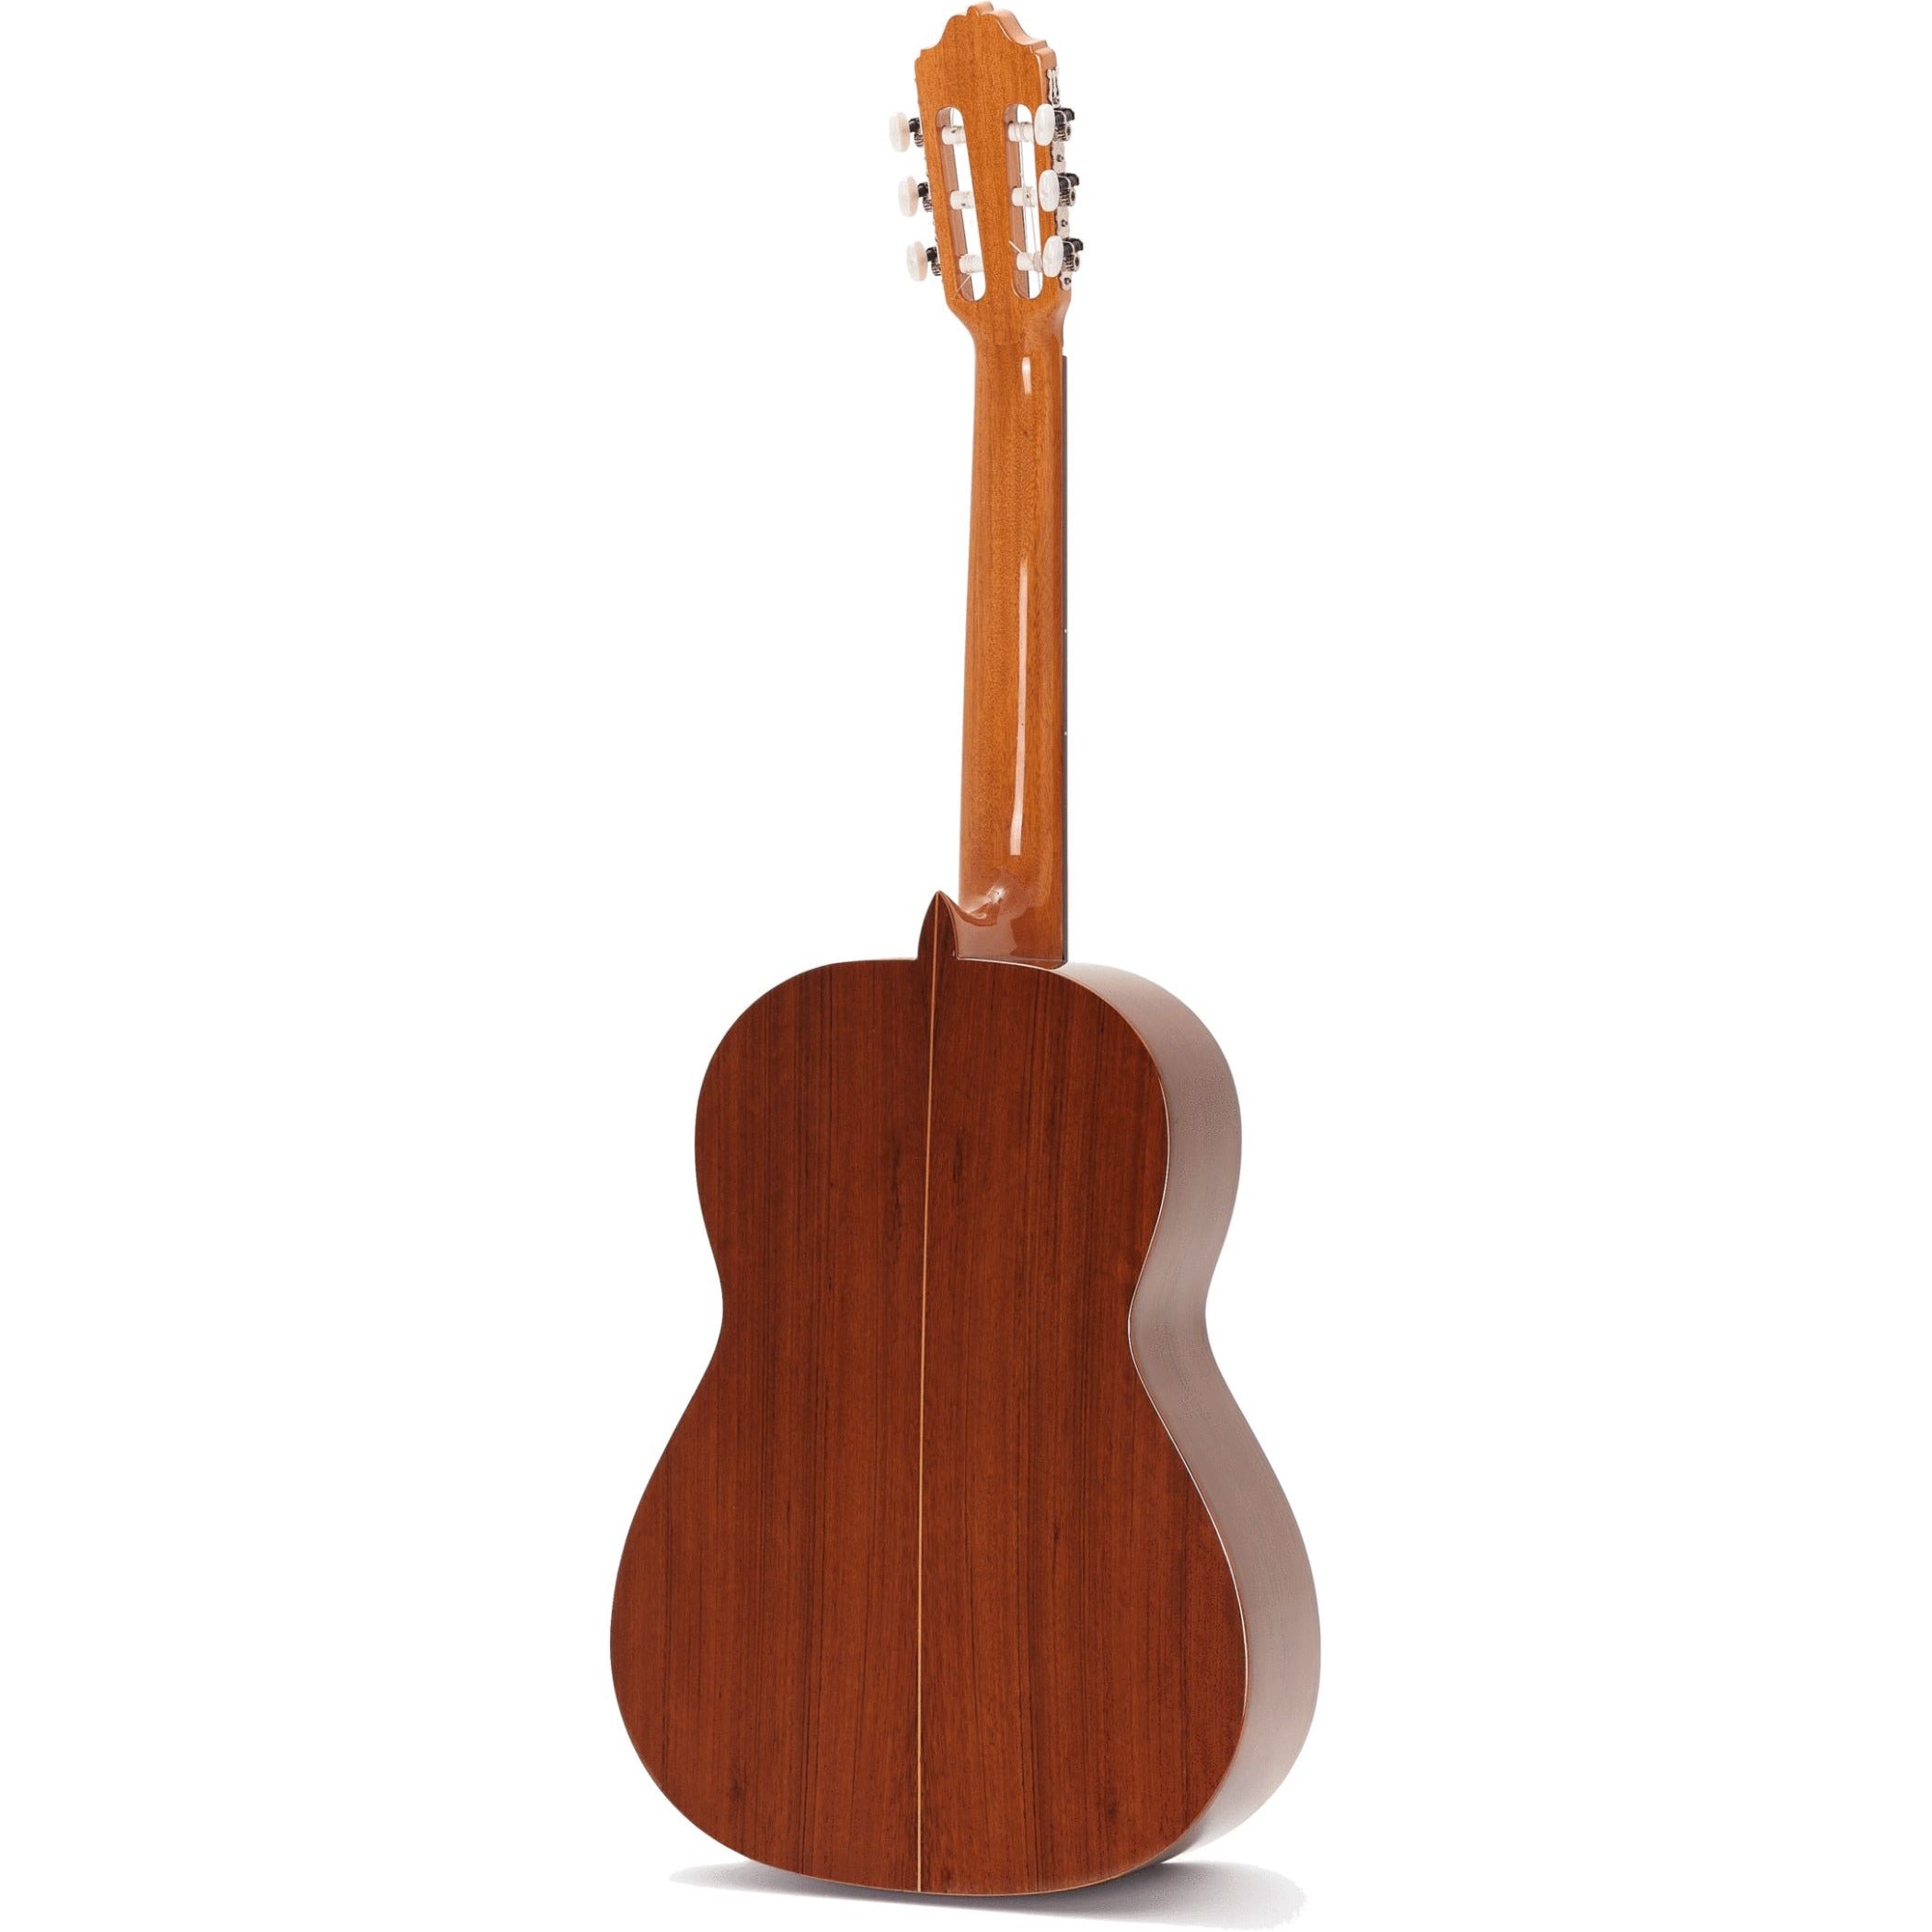 Esteve 4ST Nylon String Guitar, Solid Cedar Top